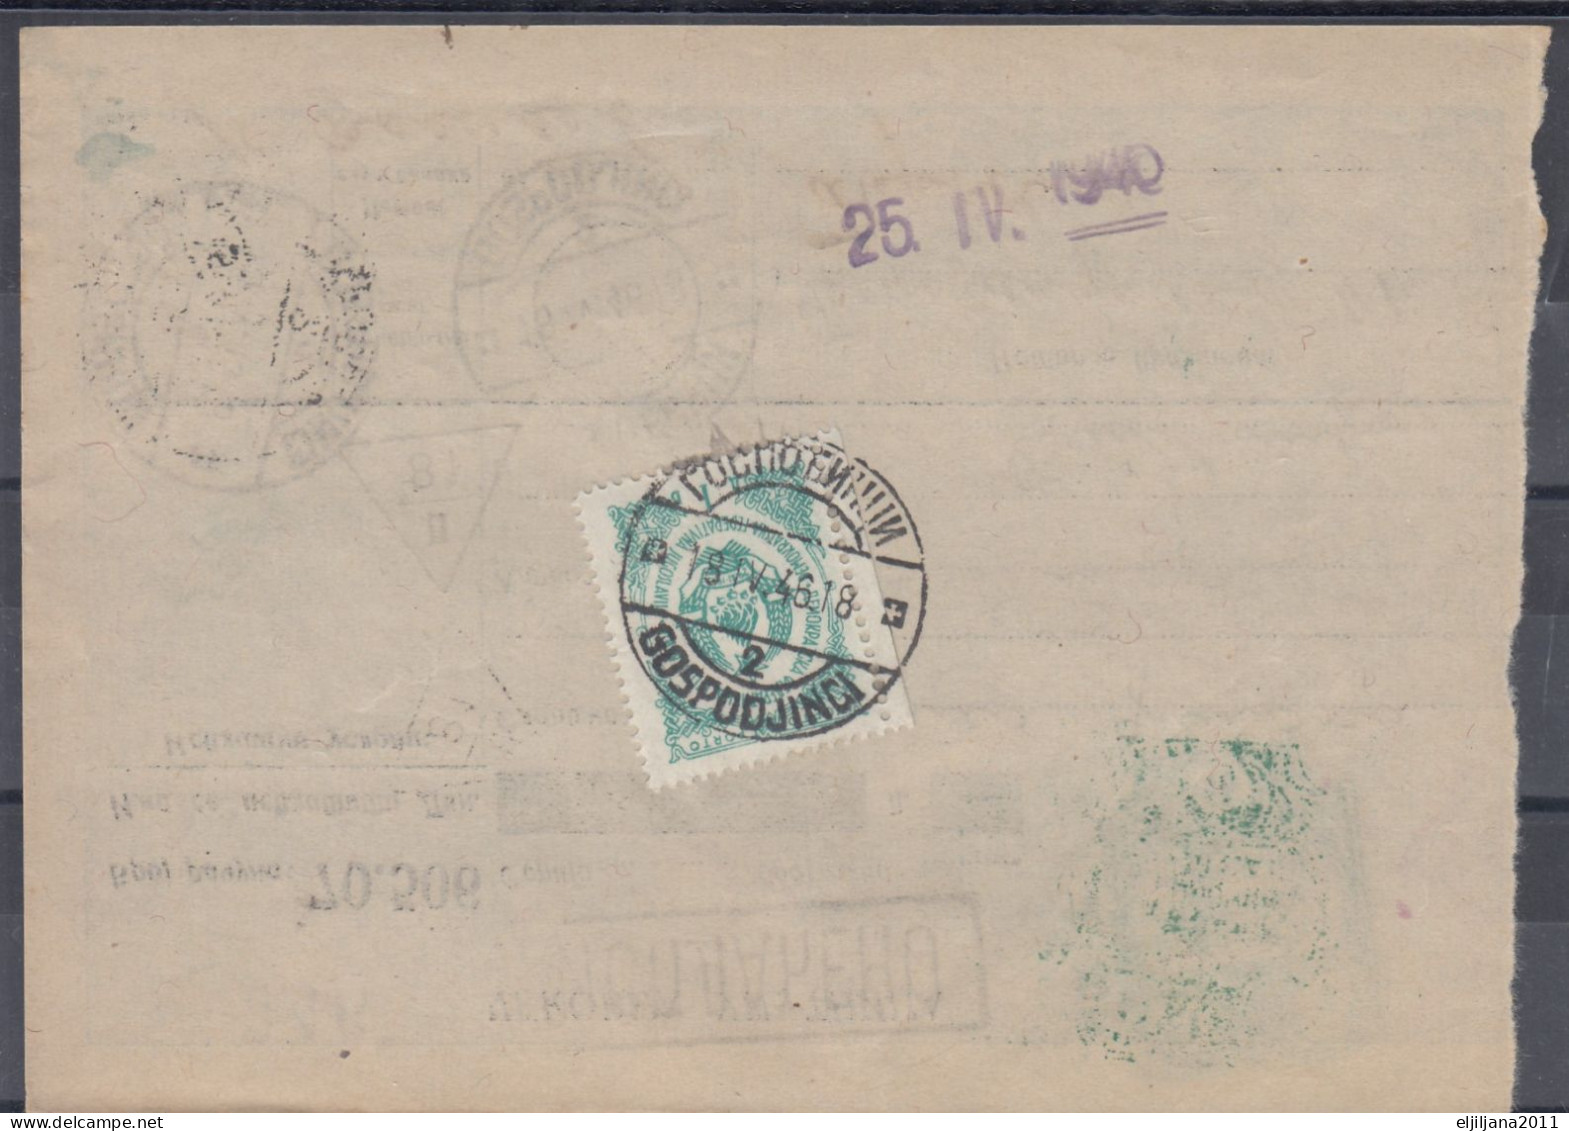 ⁕ Yugoslavia 1946 Serbia / Vojvodina ⁕ Postal Savings Bank Novi Sad - Money Order Receipt - PORTO Official ⁕ GOSPODJINCI - Portomarken